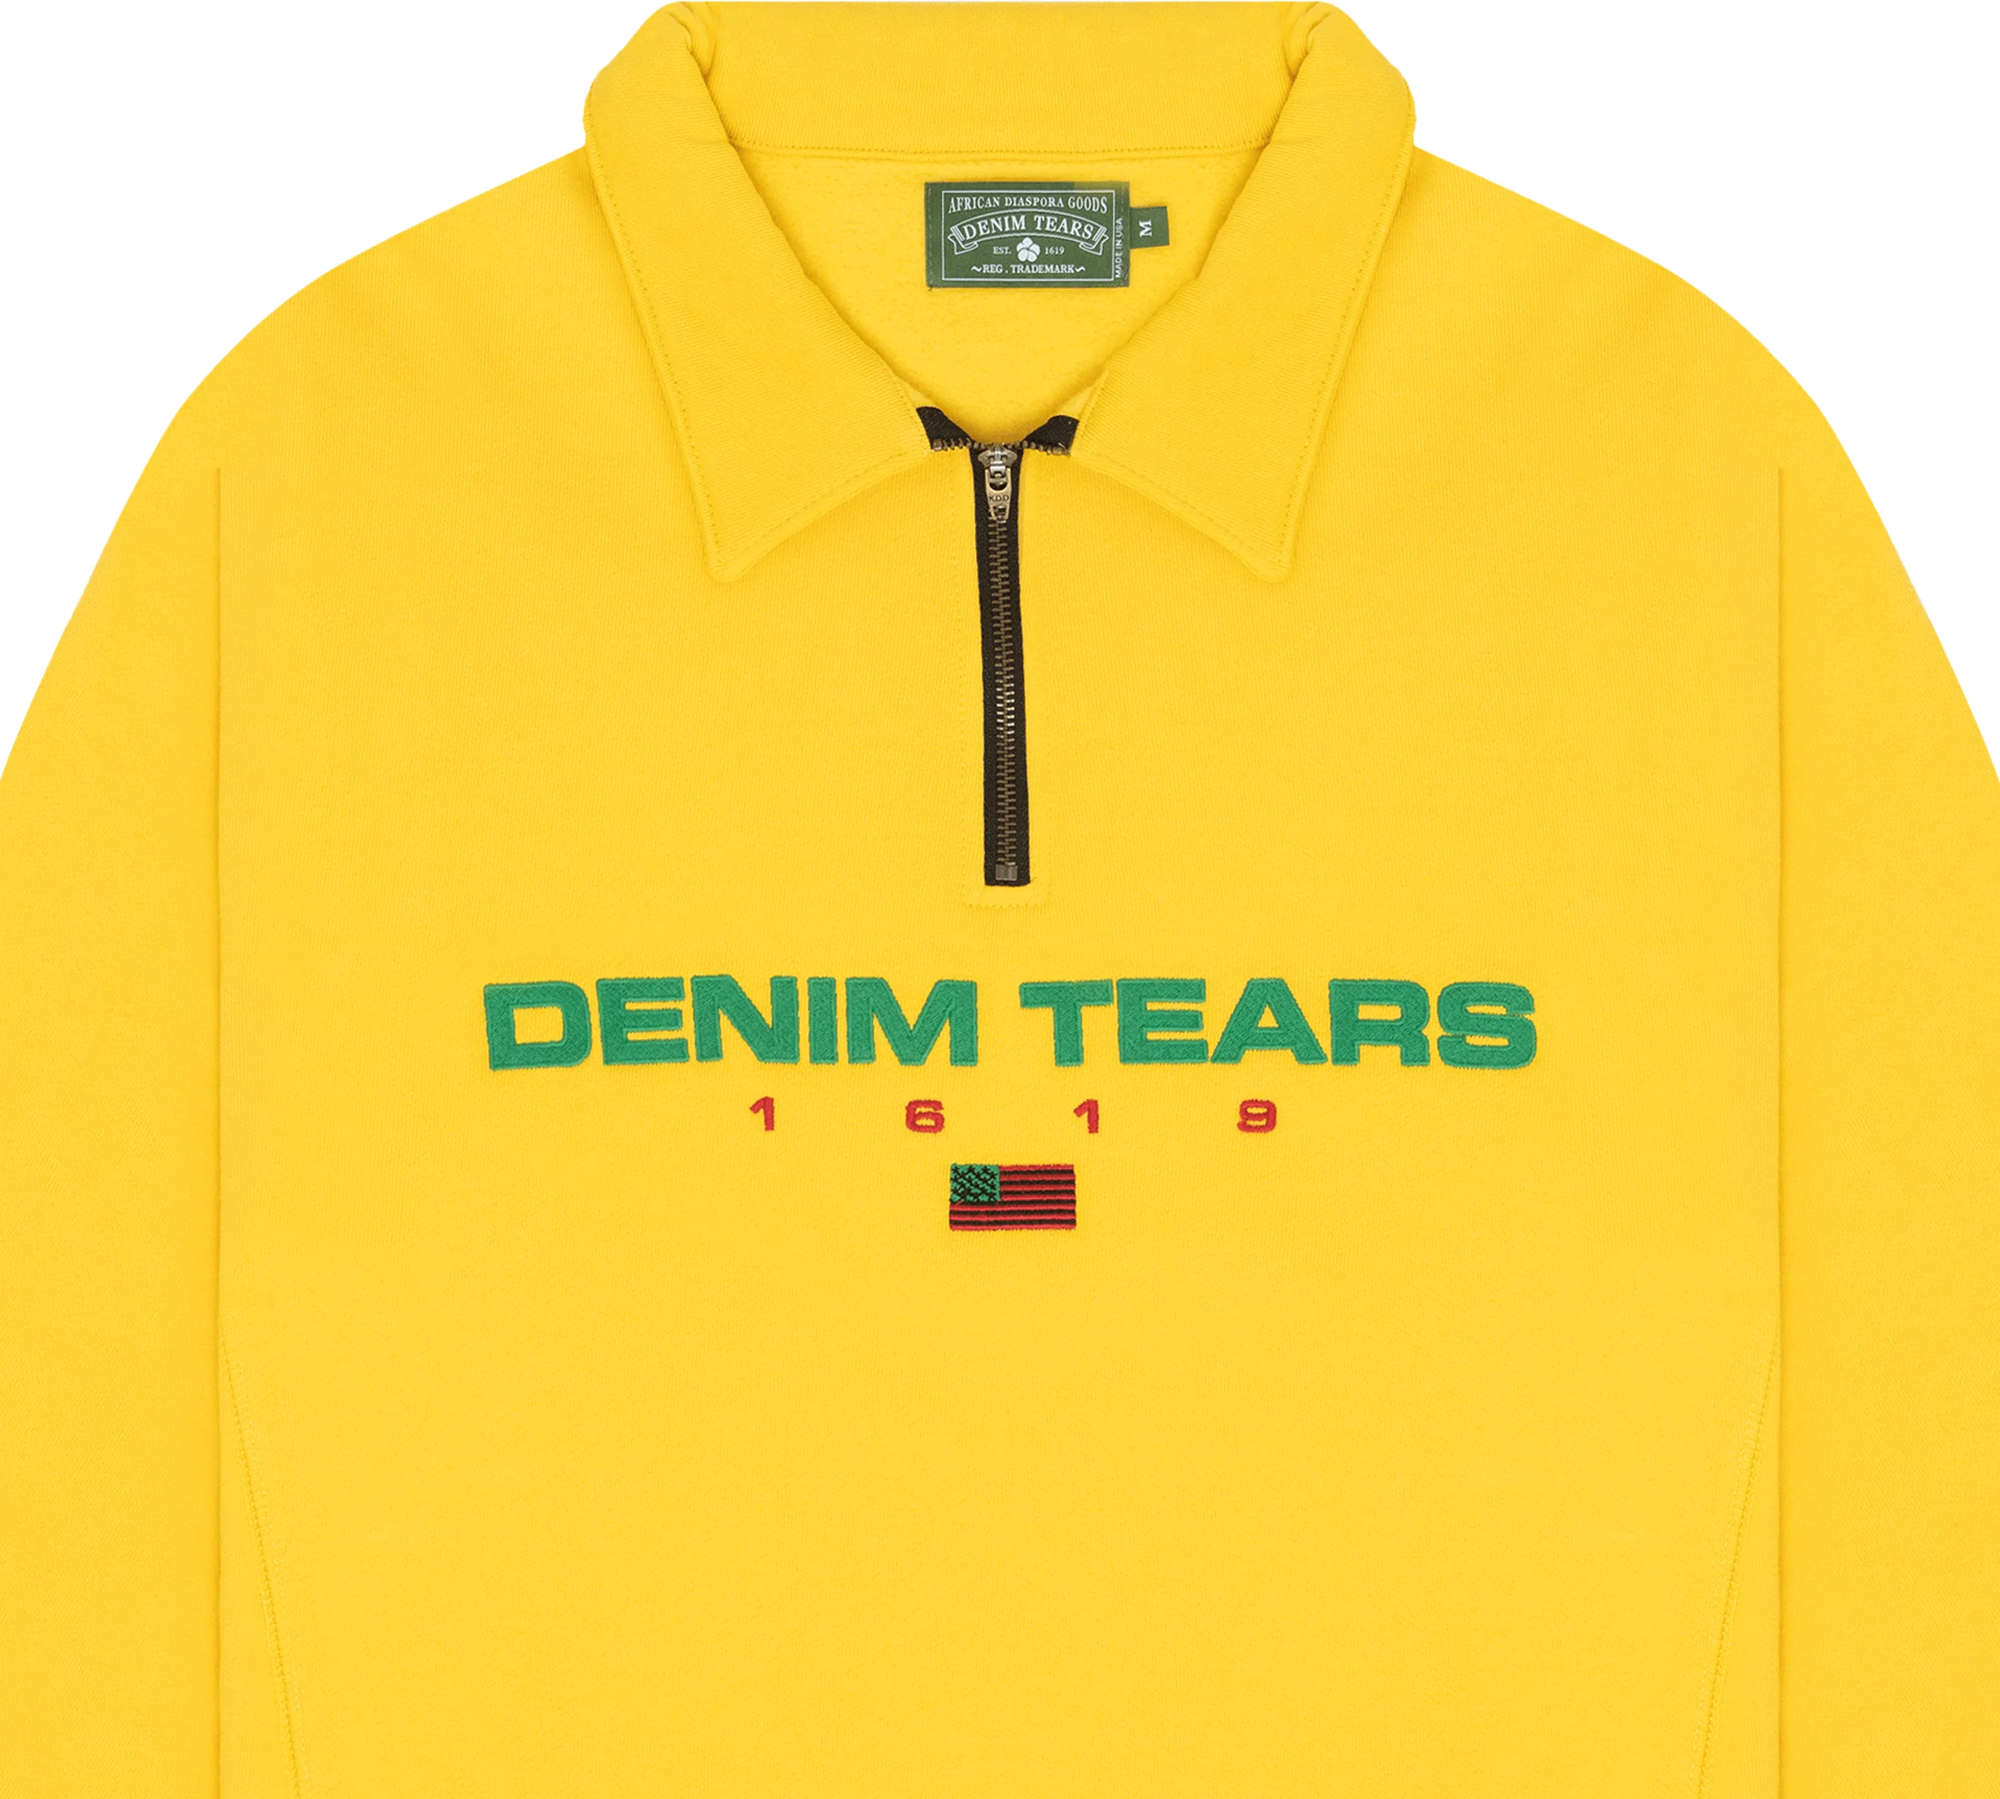 DENIM TEARS - Tyson Beckford Half Zip Pullover - (Yellow) view 3